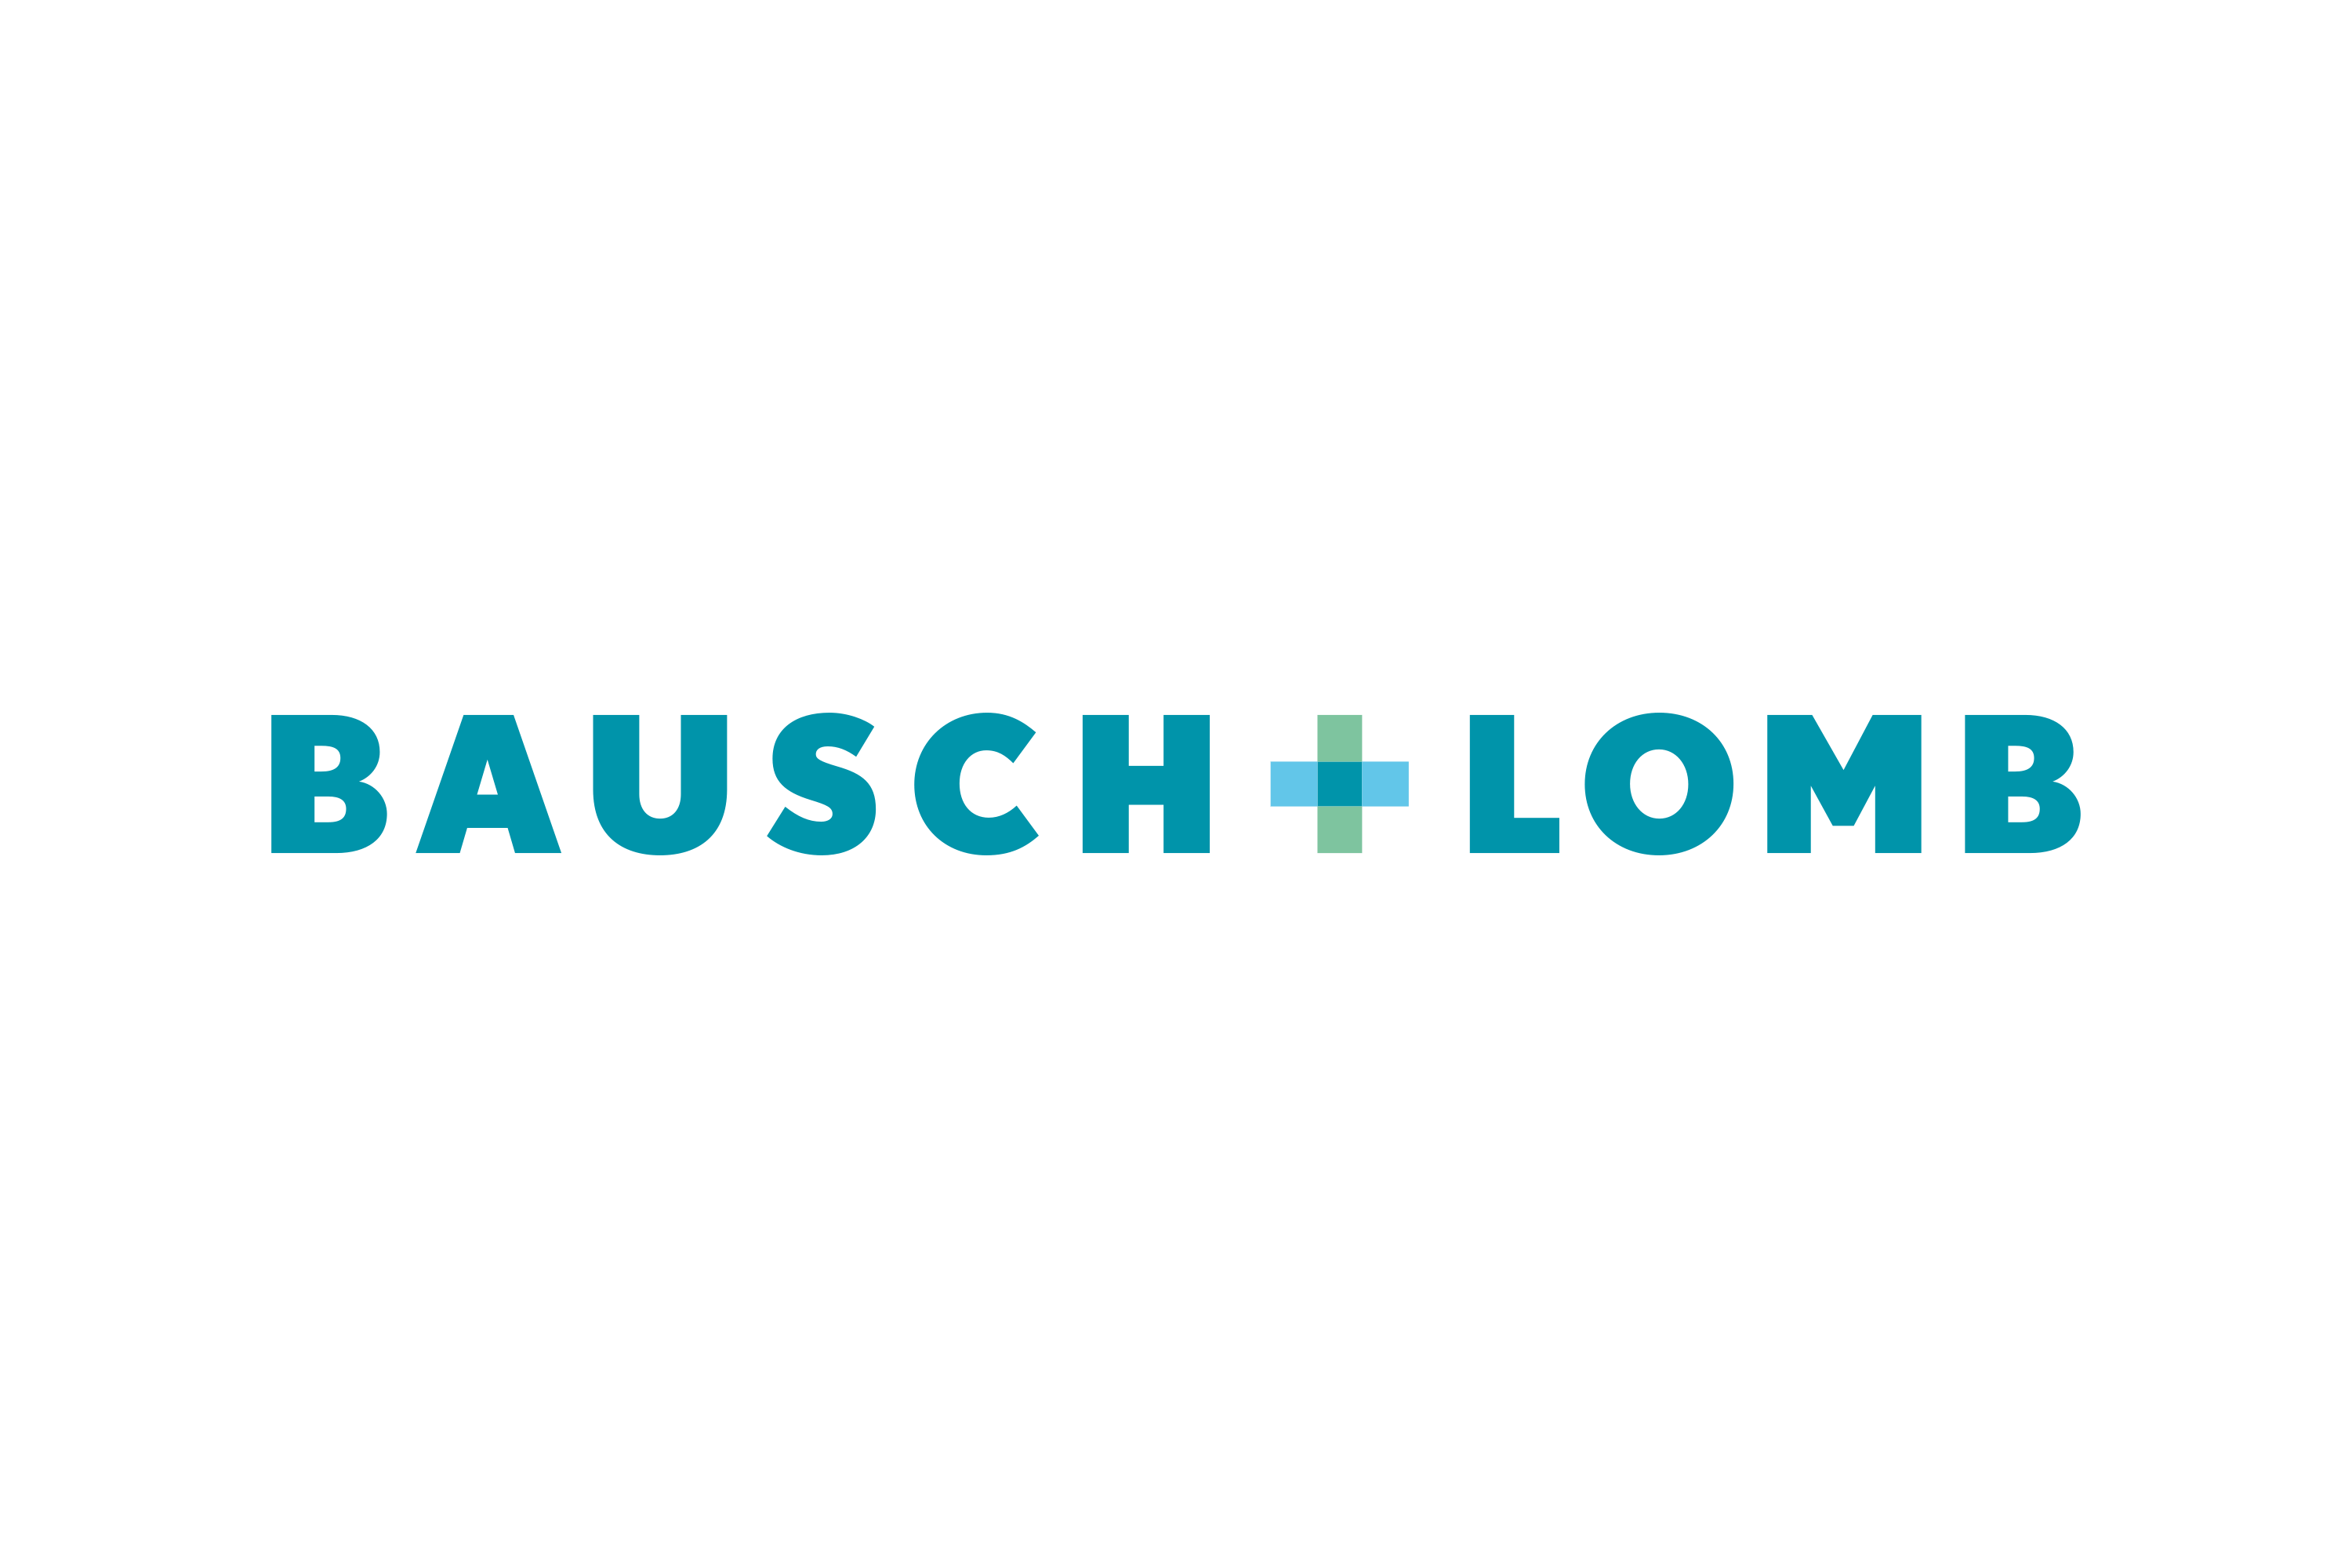 Bausch_&_Lomb-Logo.wine